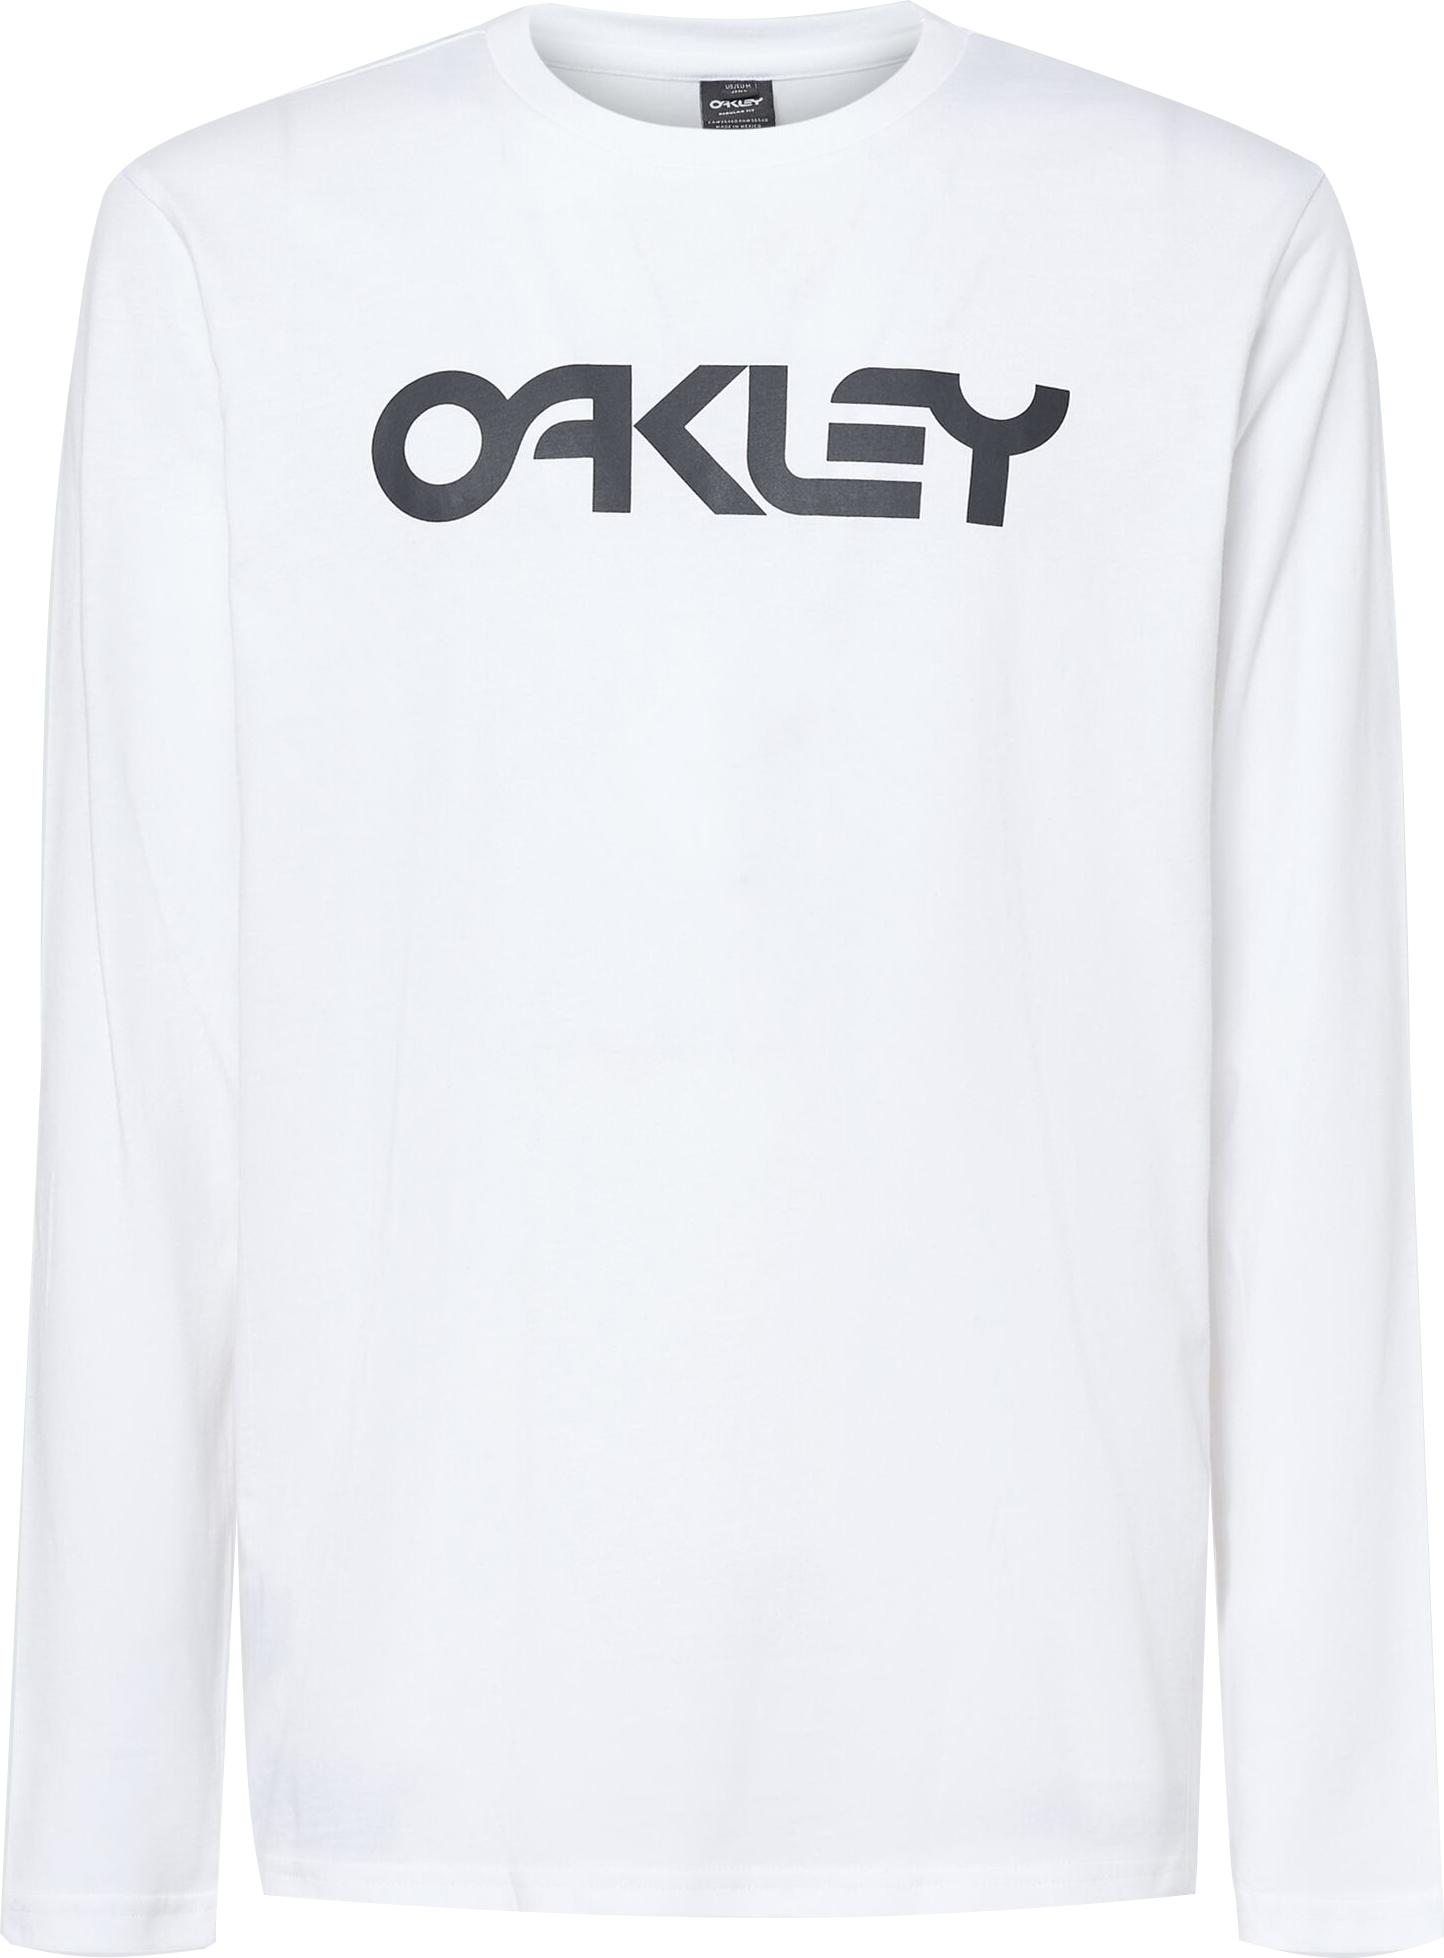 Oakley Mark Ii Long Sleeve Tee - White/black 2